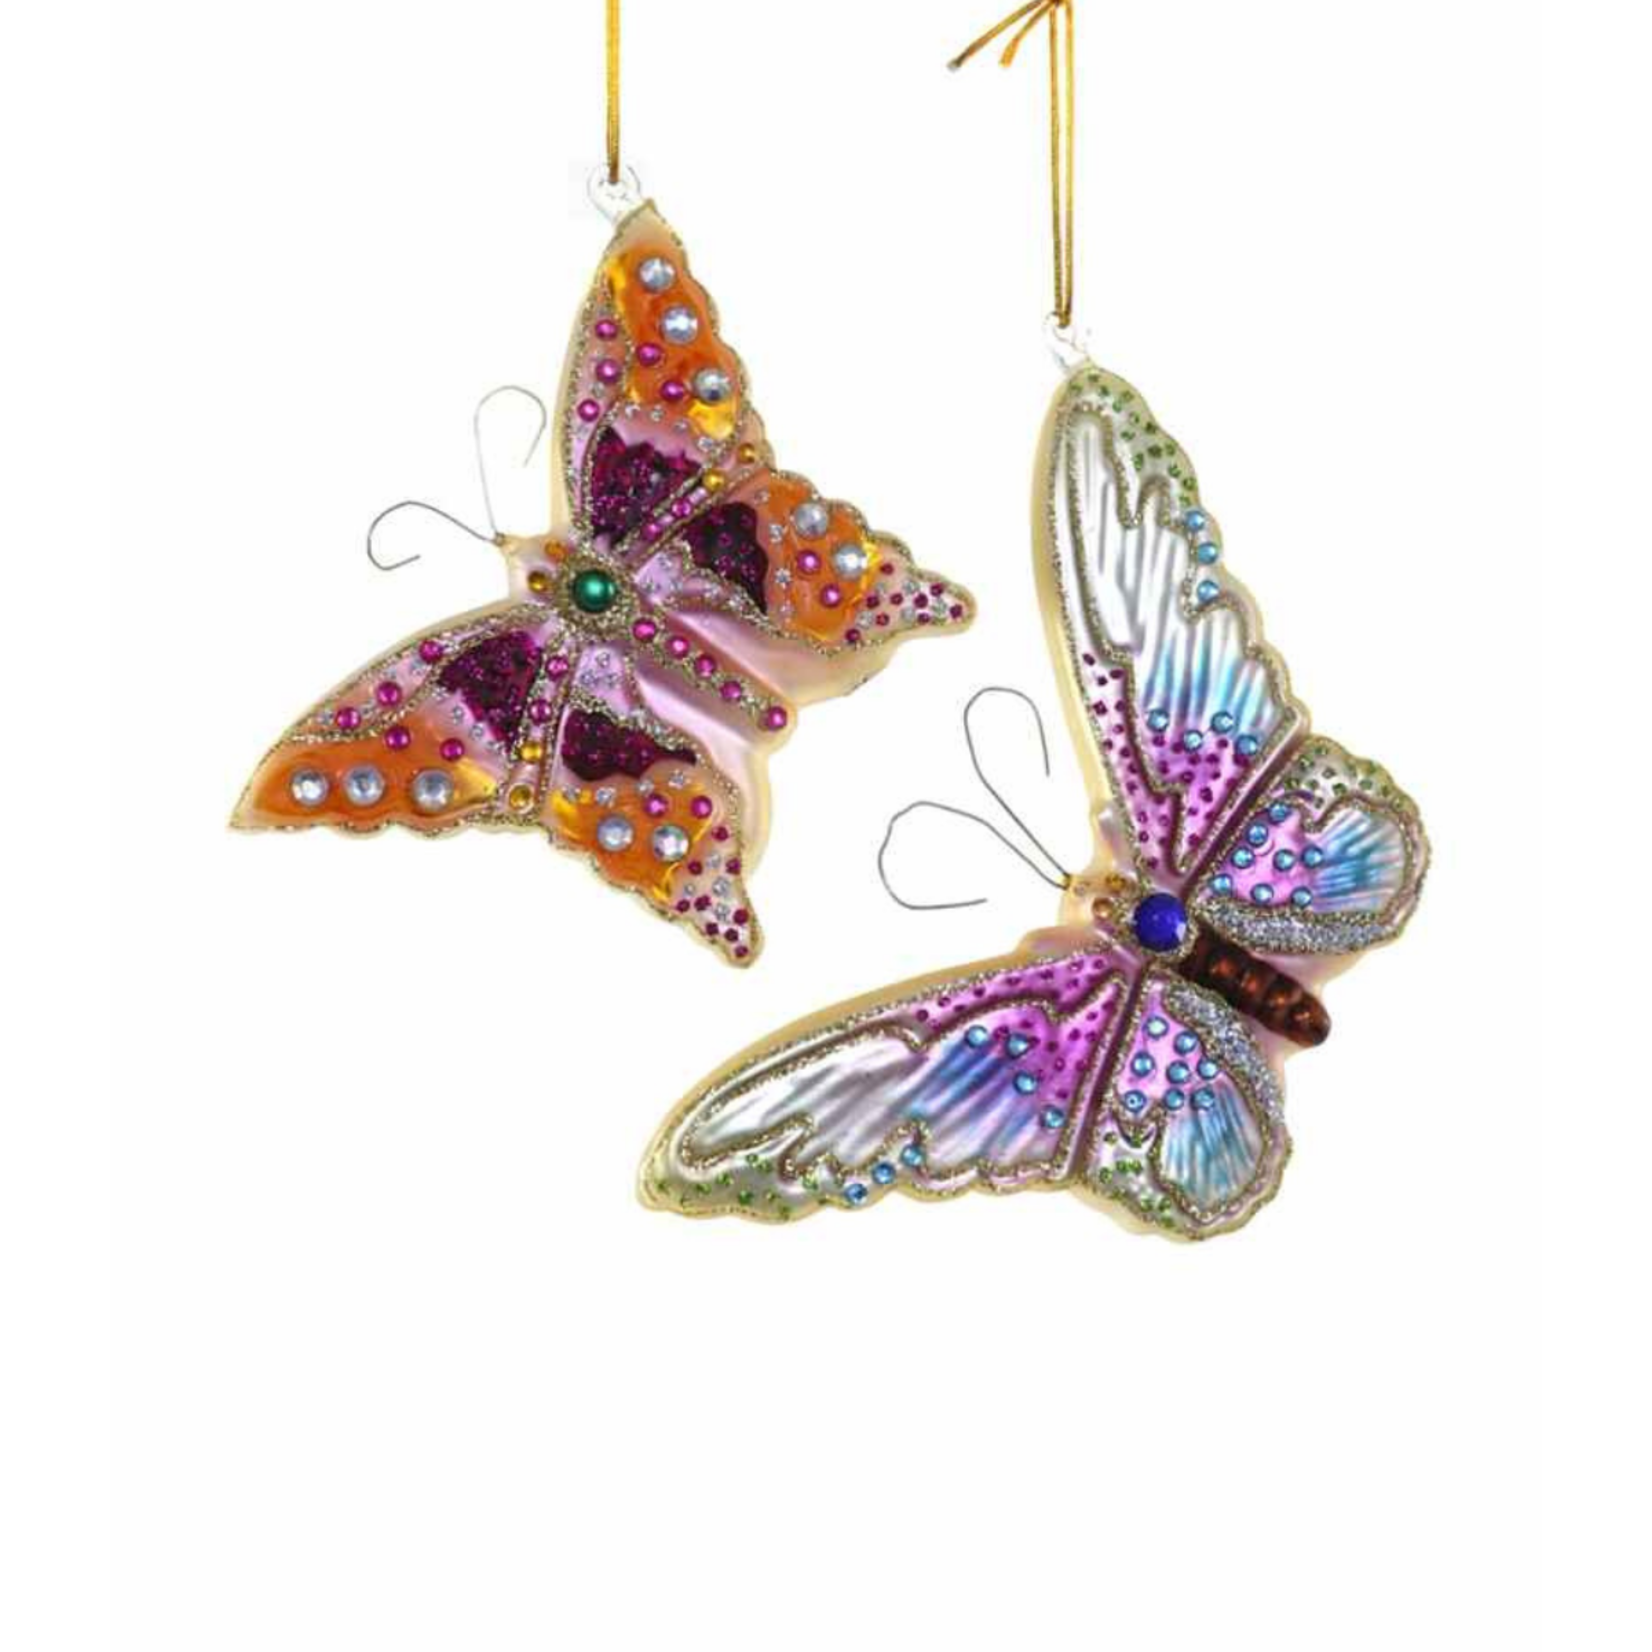 Cody Foster Enchanted Papillion Ornament- Warm